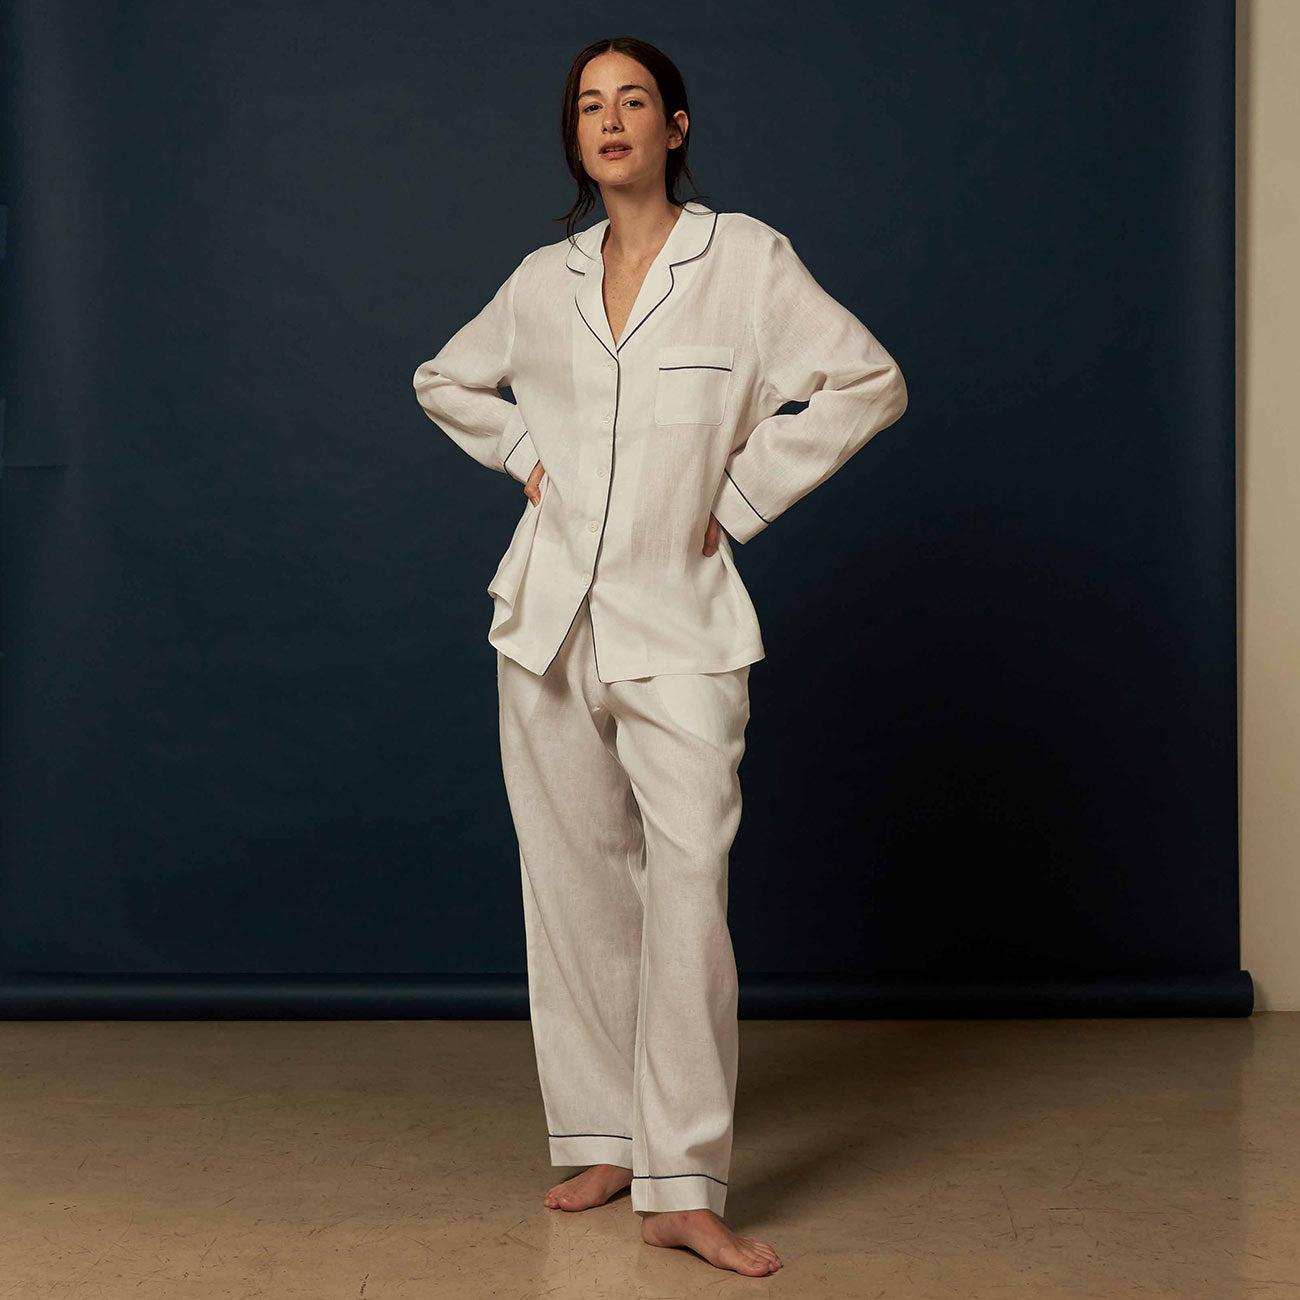 Poplin Pyjama Trousers - Blue/White - Ladies | H&M GB